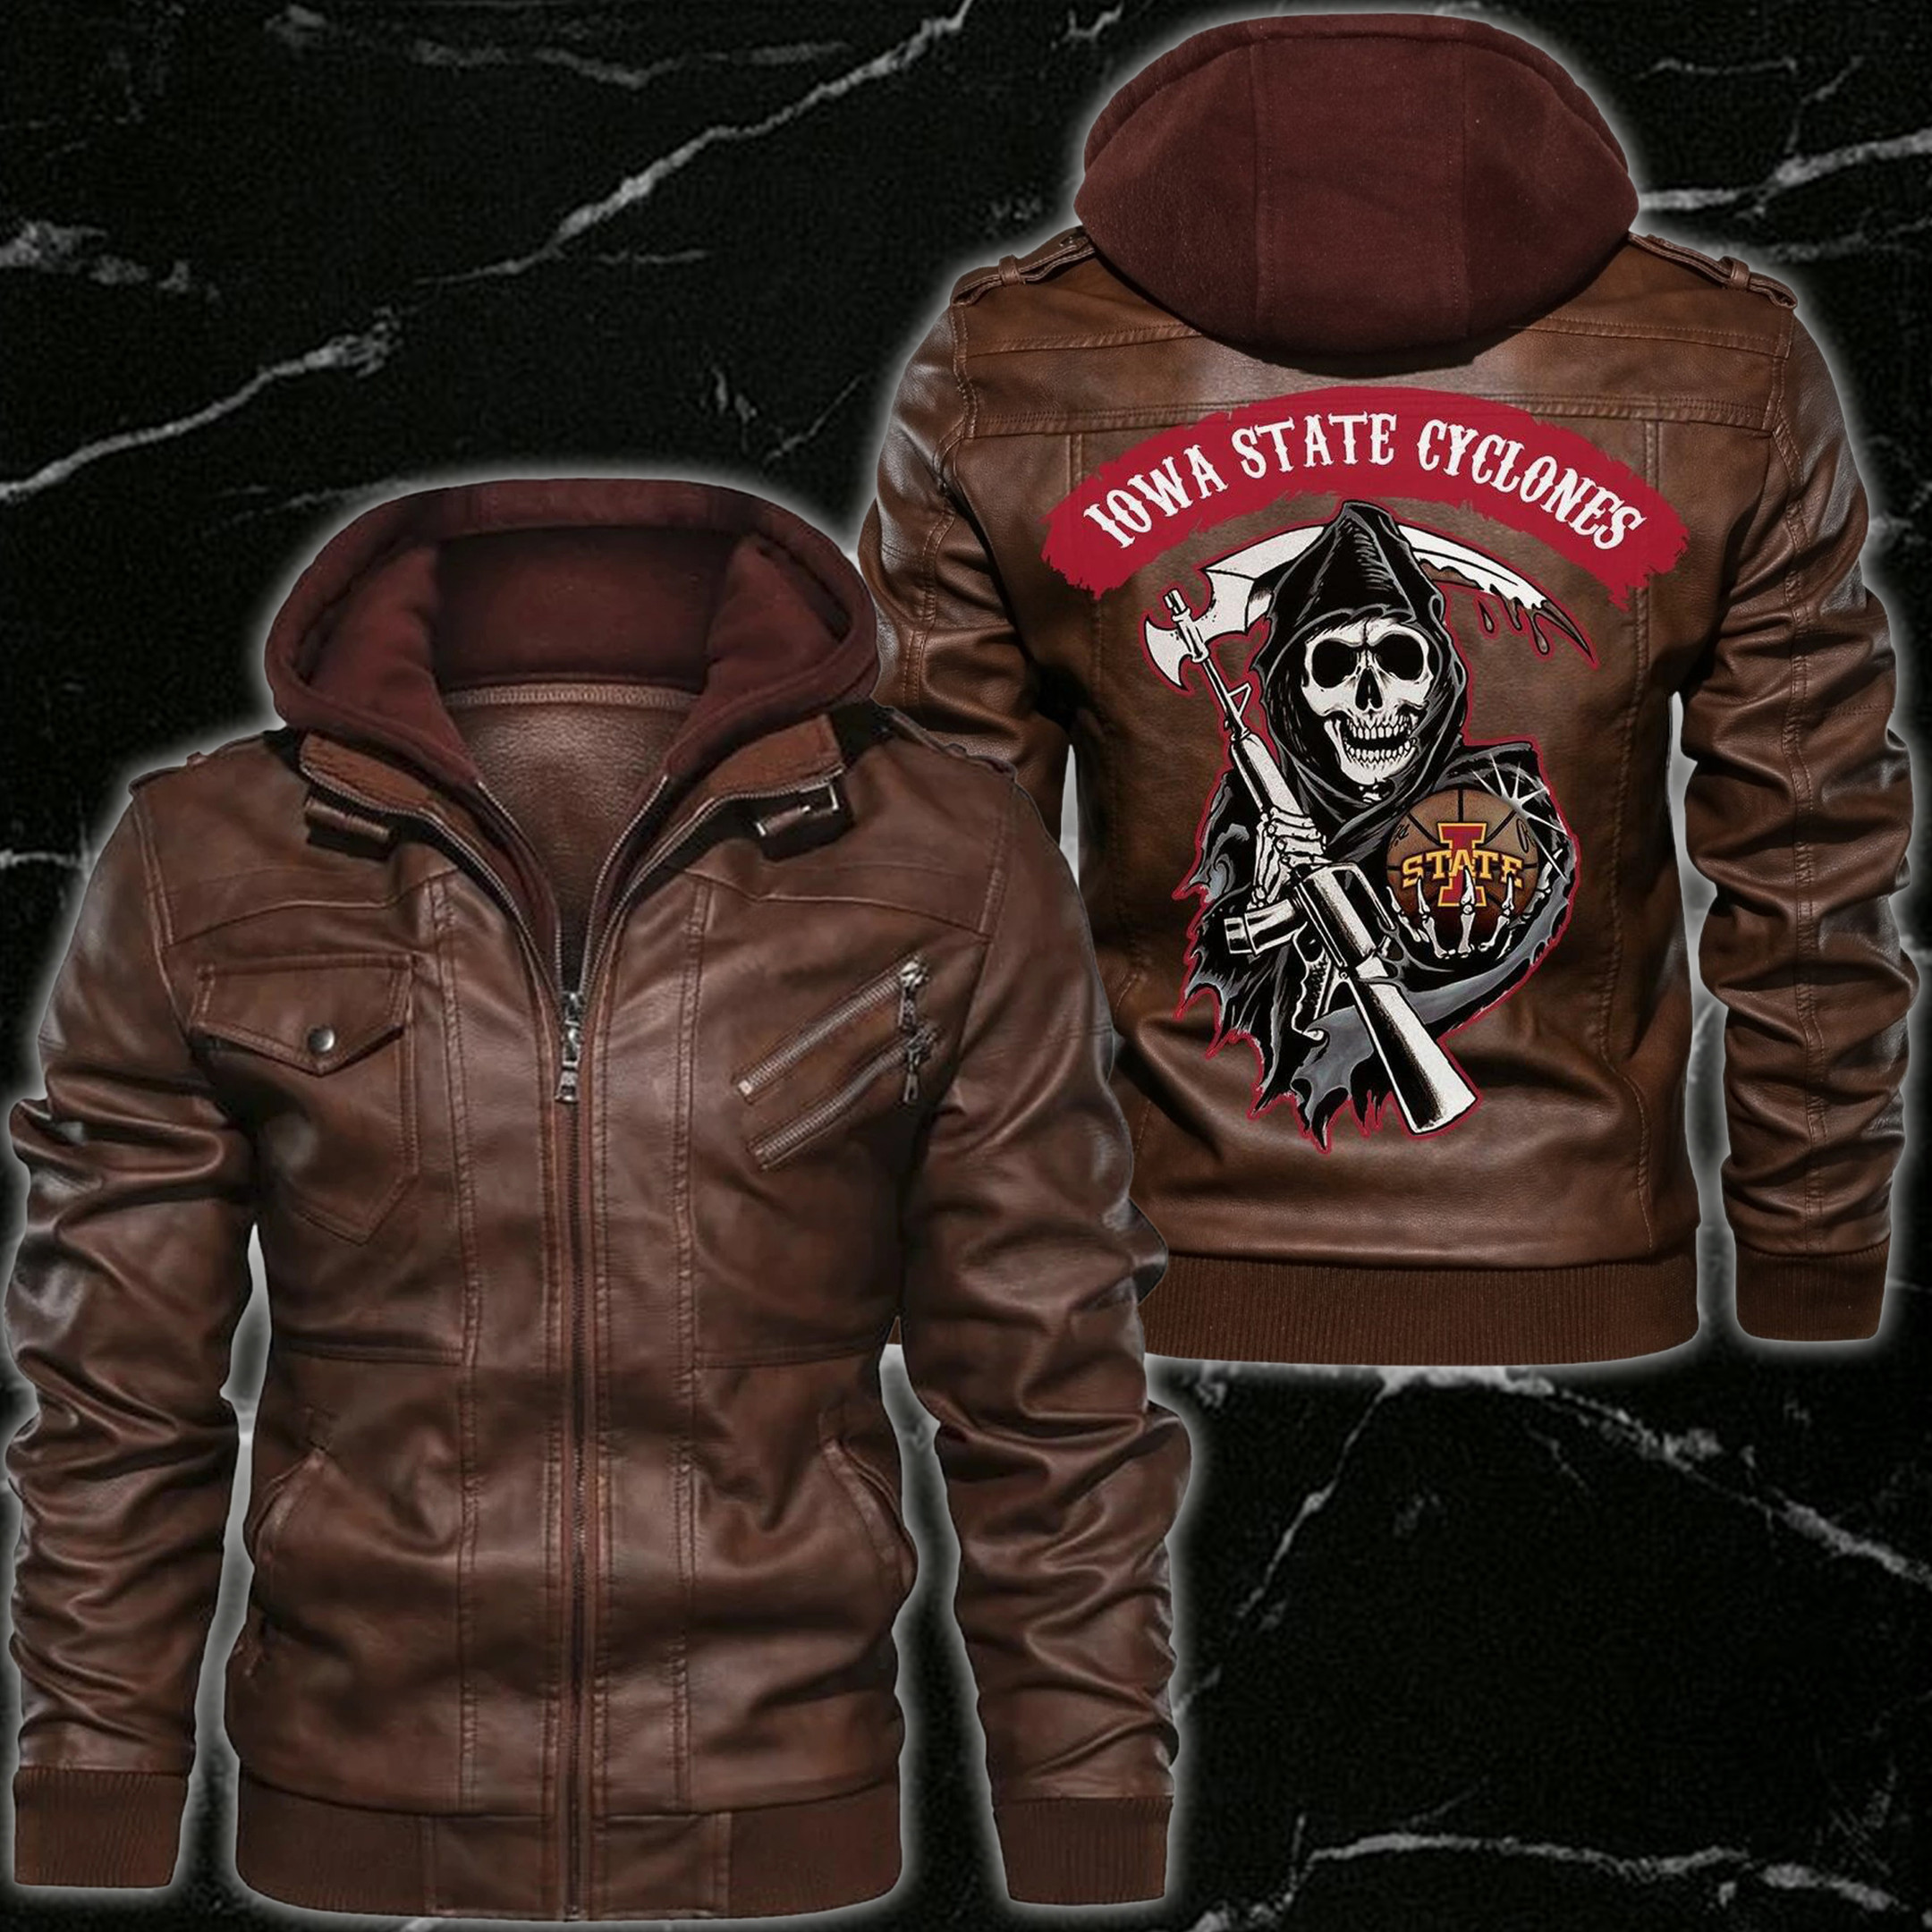 Choosing Leather Jacket that looks good on you below 152